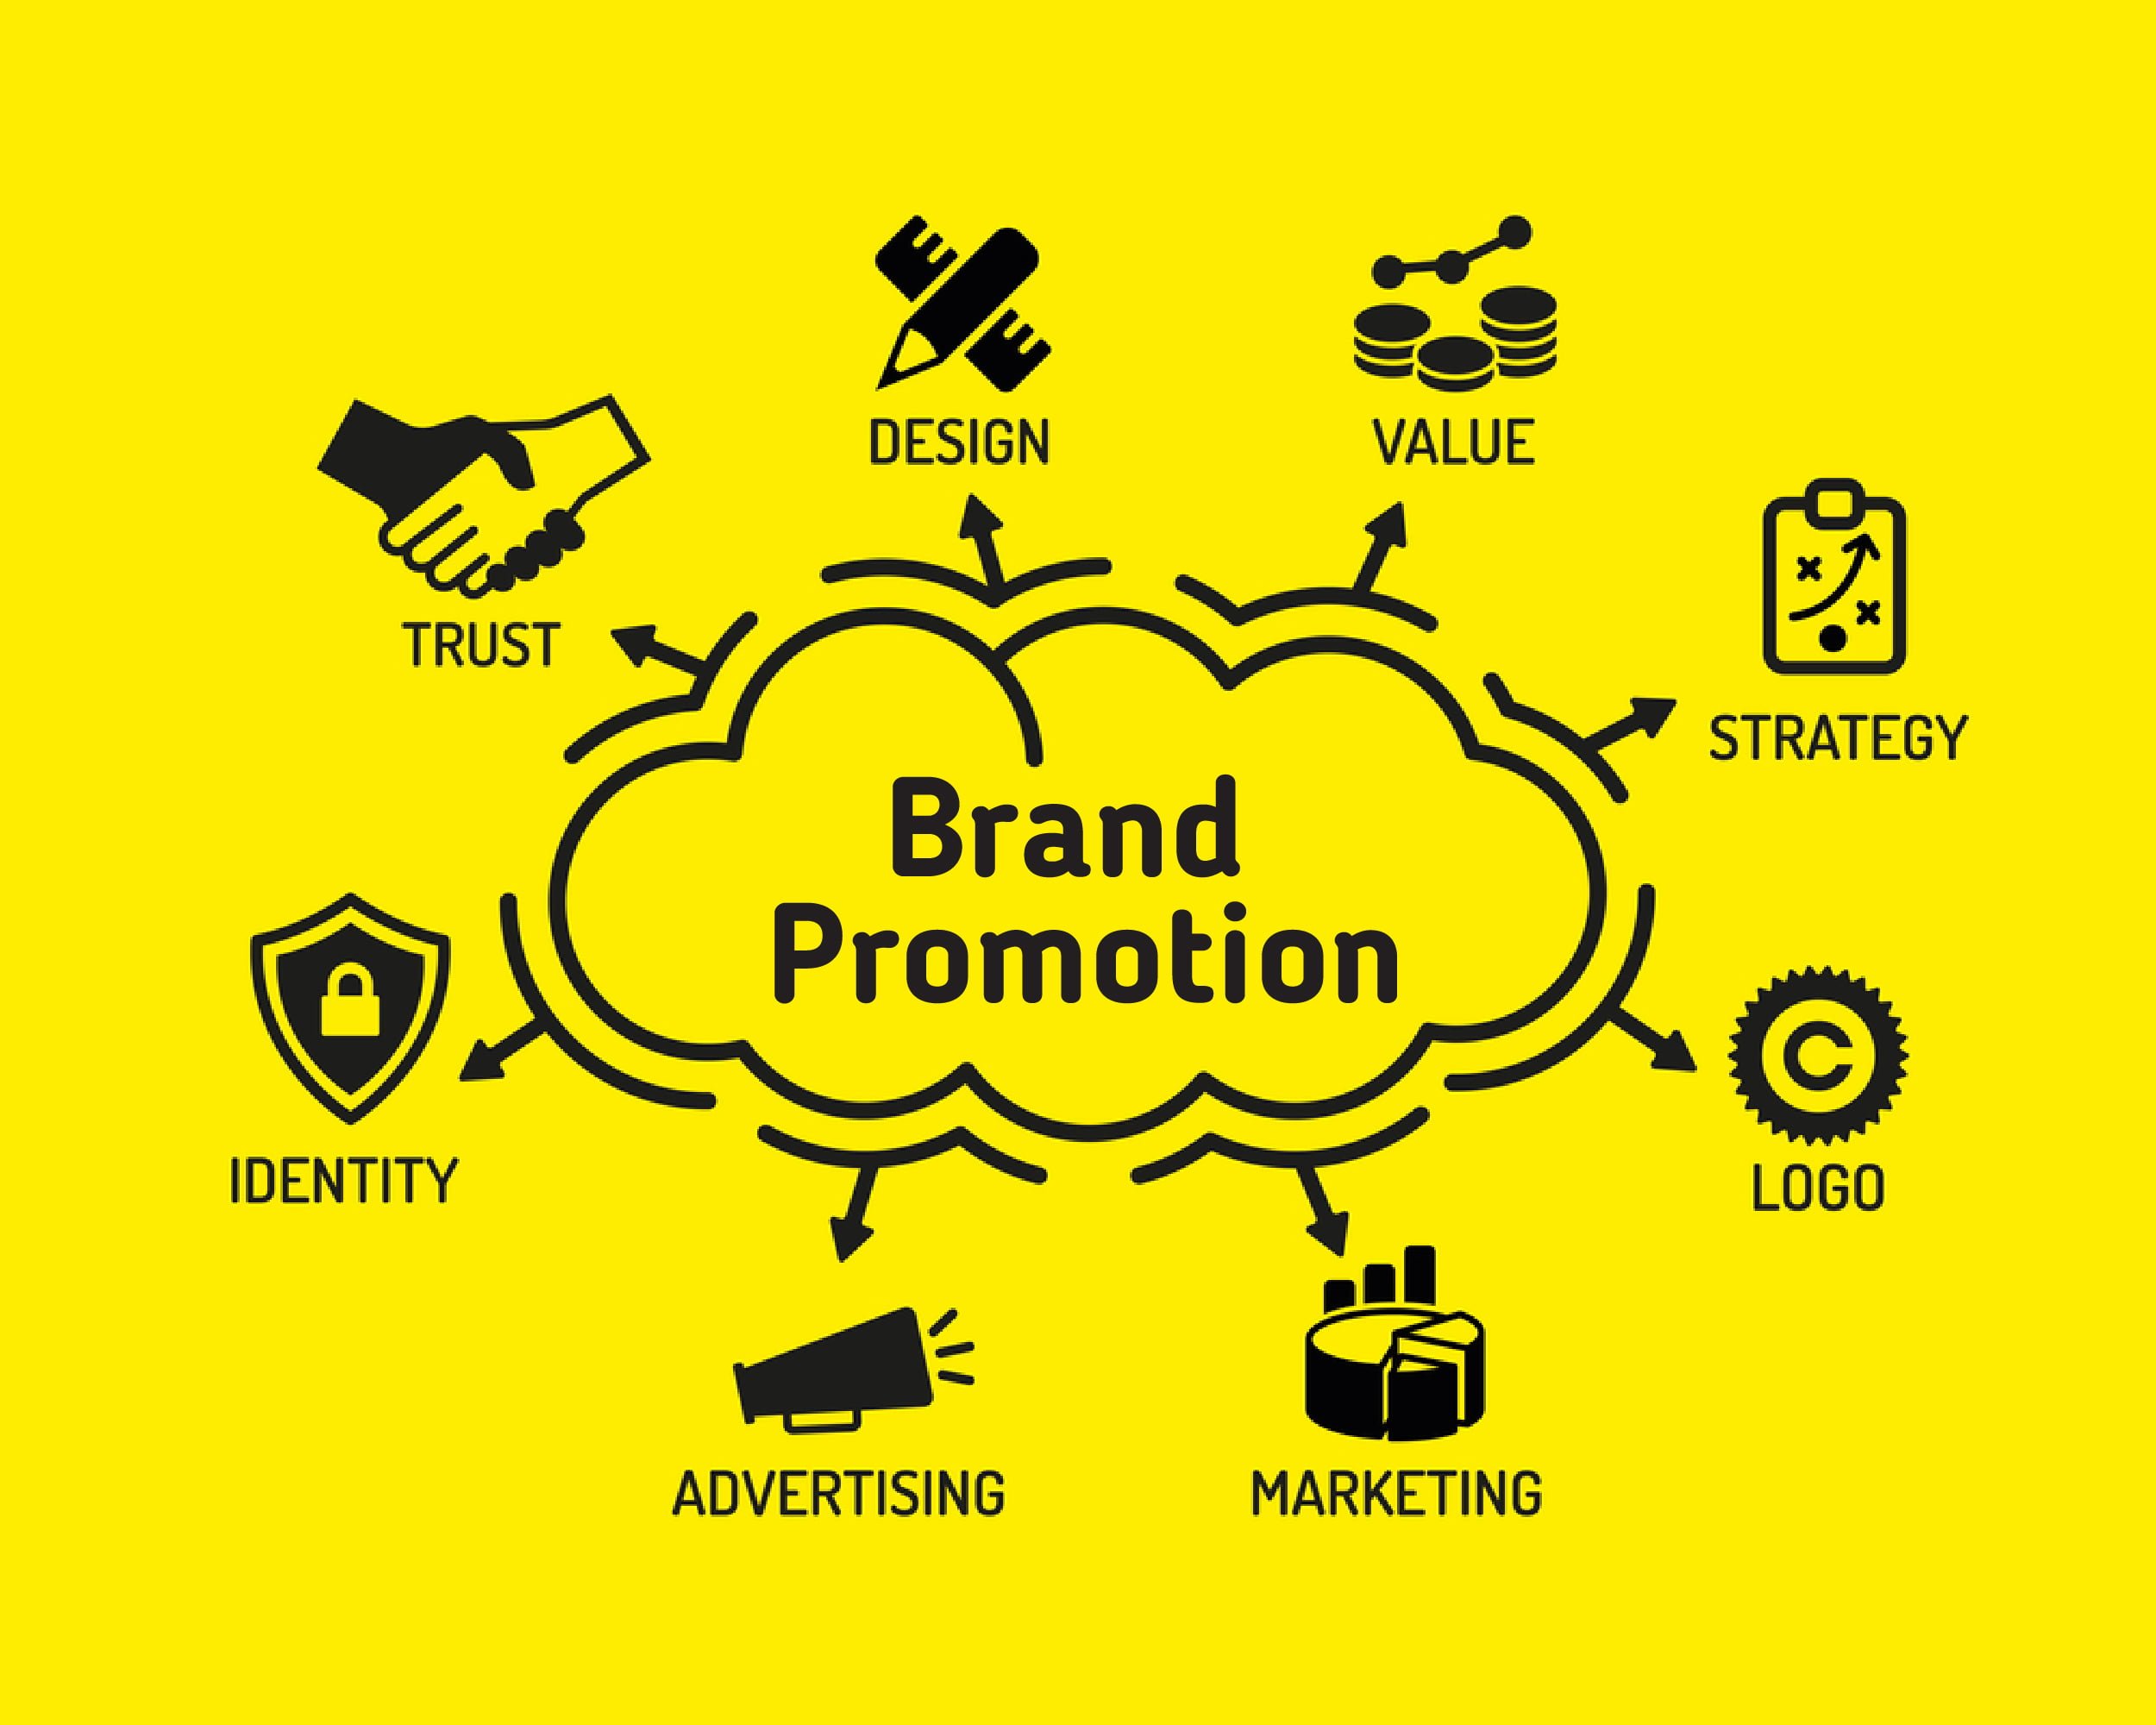 Promotions company. Бренд. Бренд маркетинг. Придумать свой бренд и логотип. Картинки брендов и логотипов.